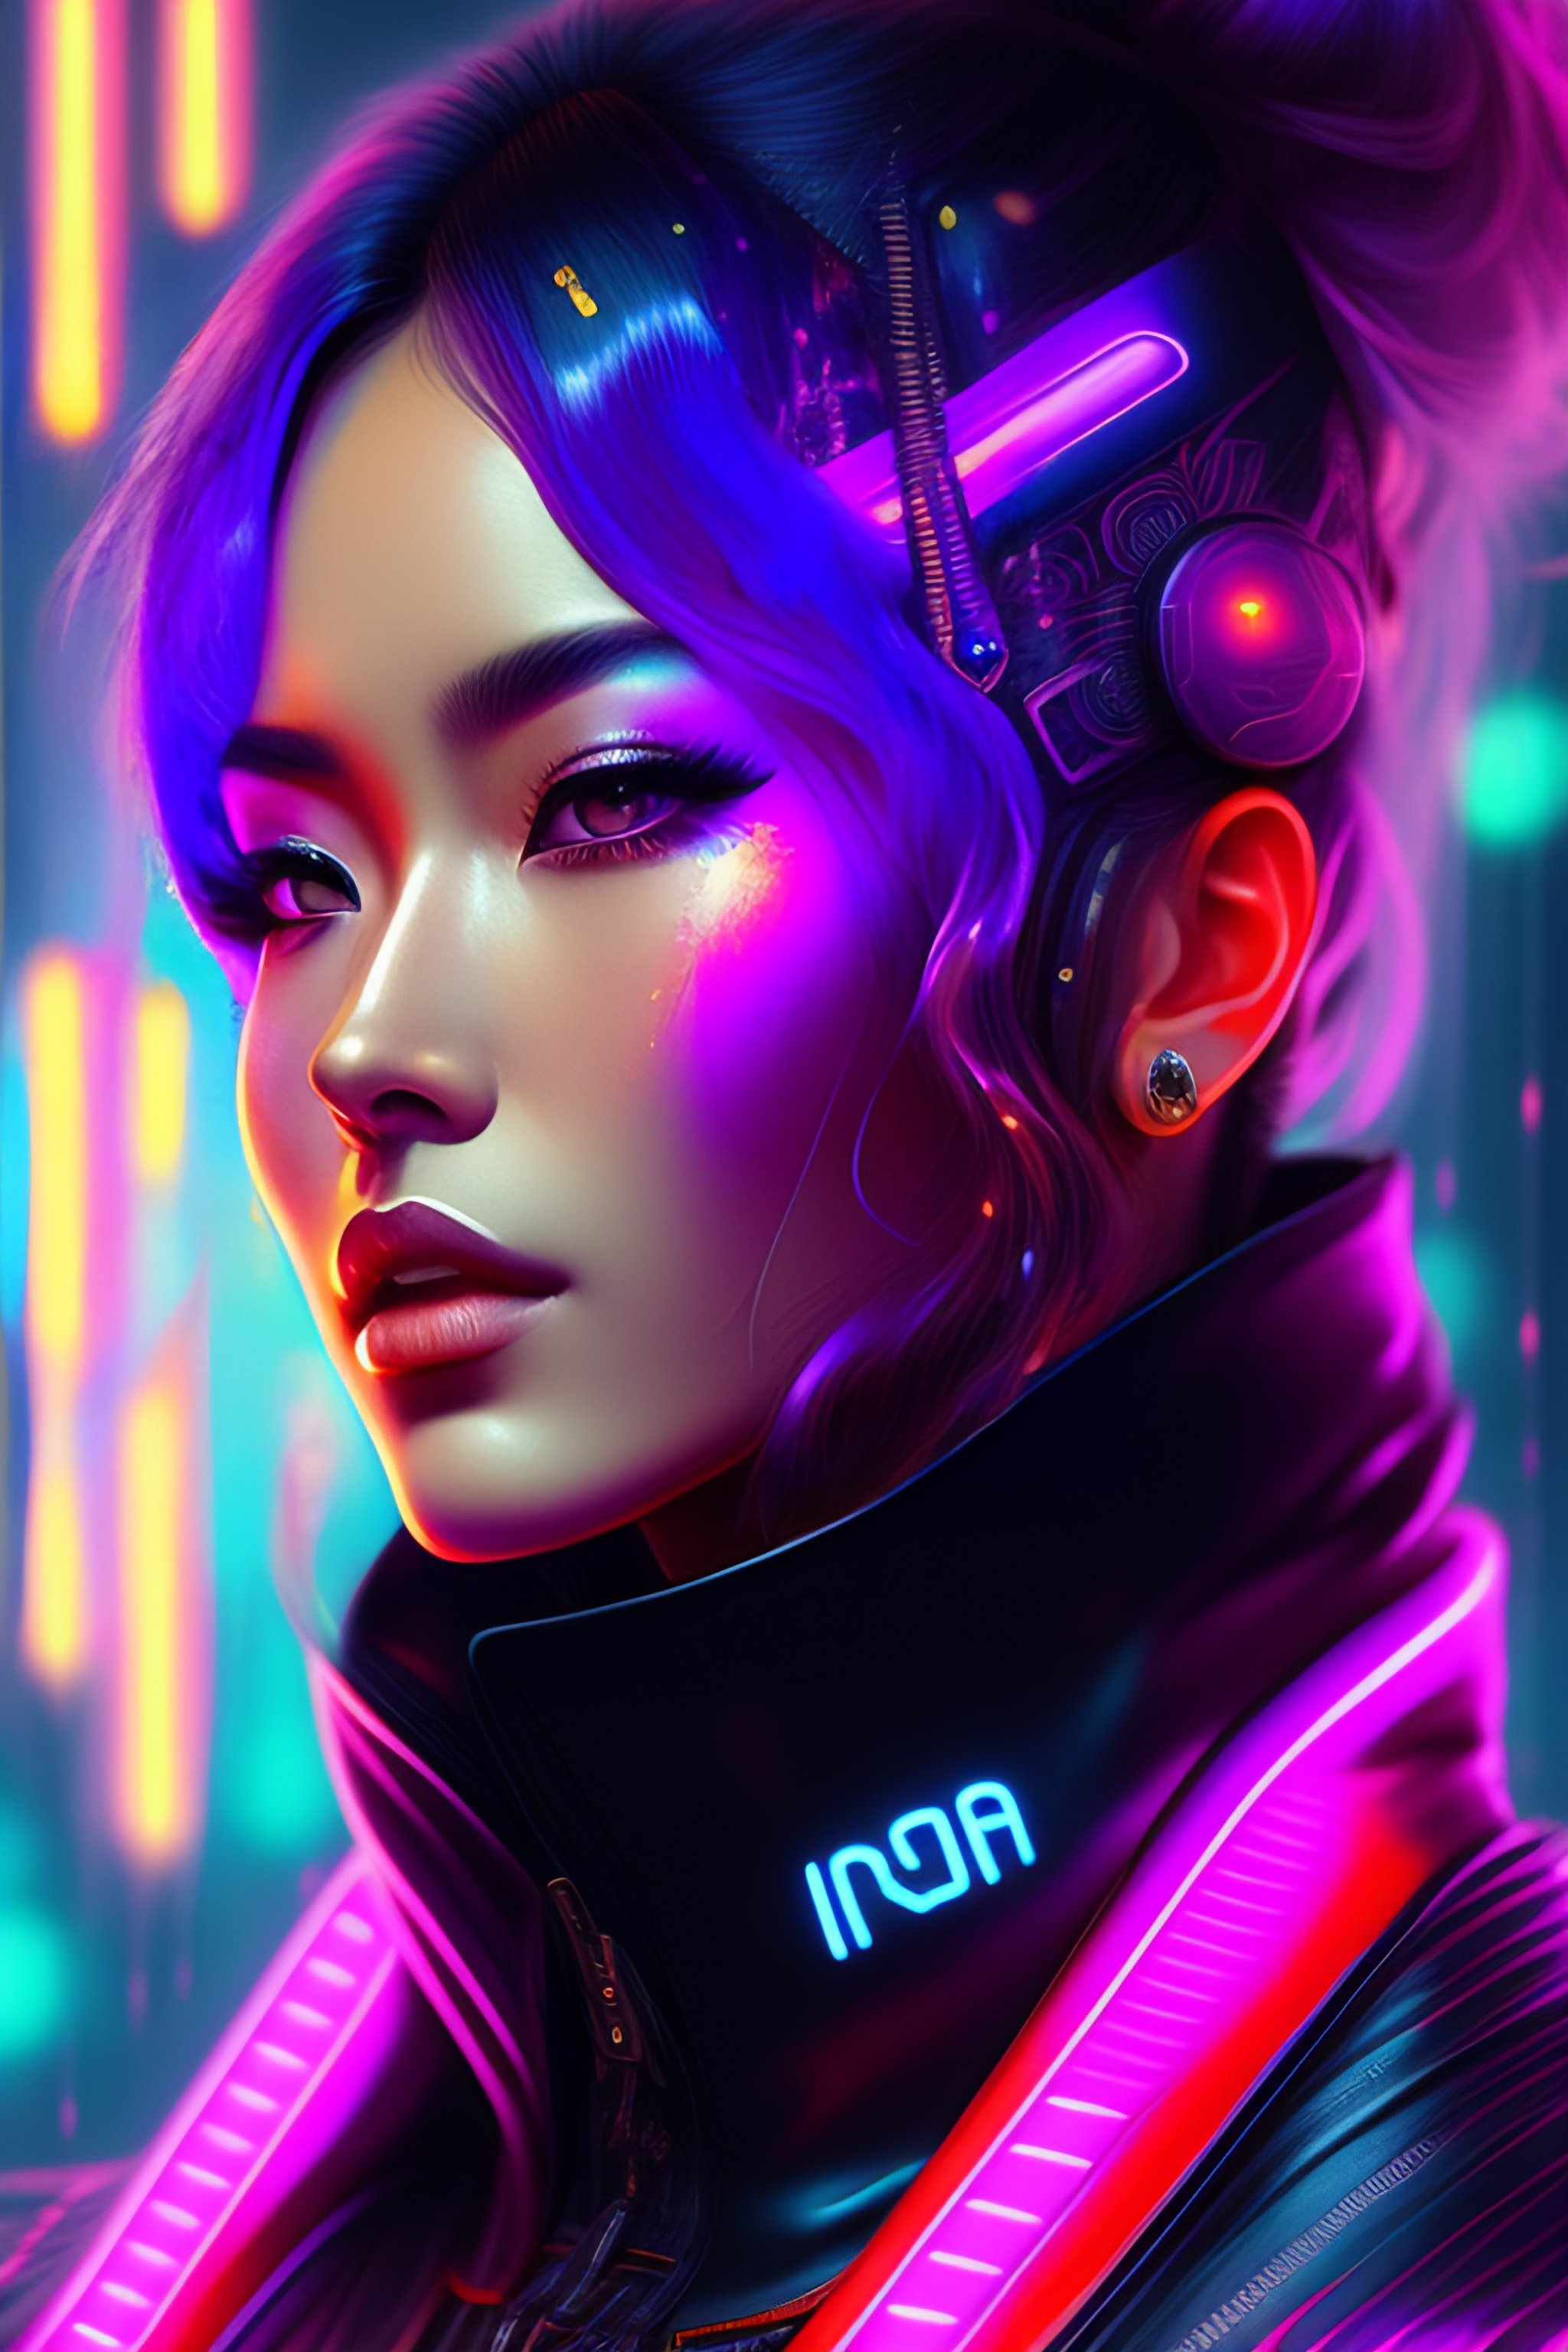 Cyberpunk-style girl with beautiful neon colors - Stock Illustration  [99174420] - PIXTA